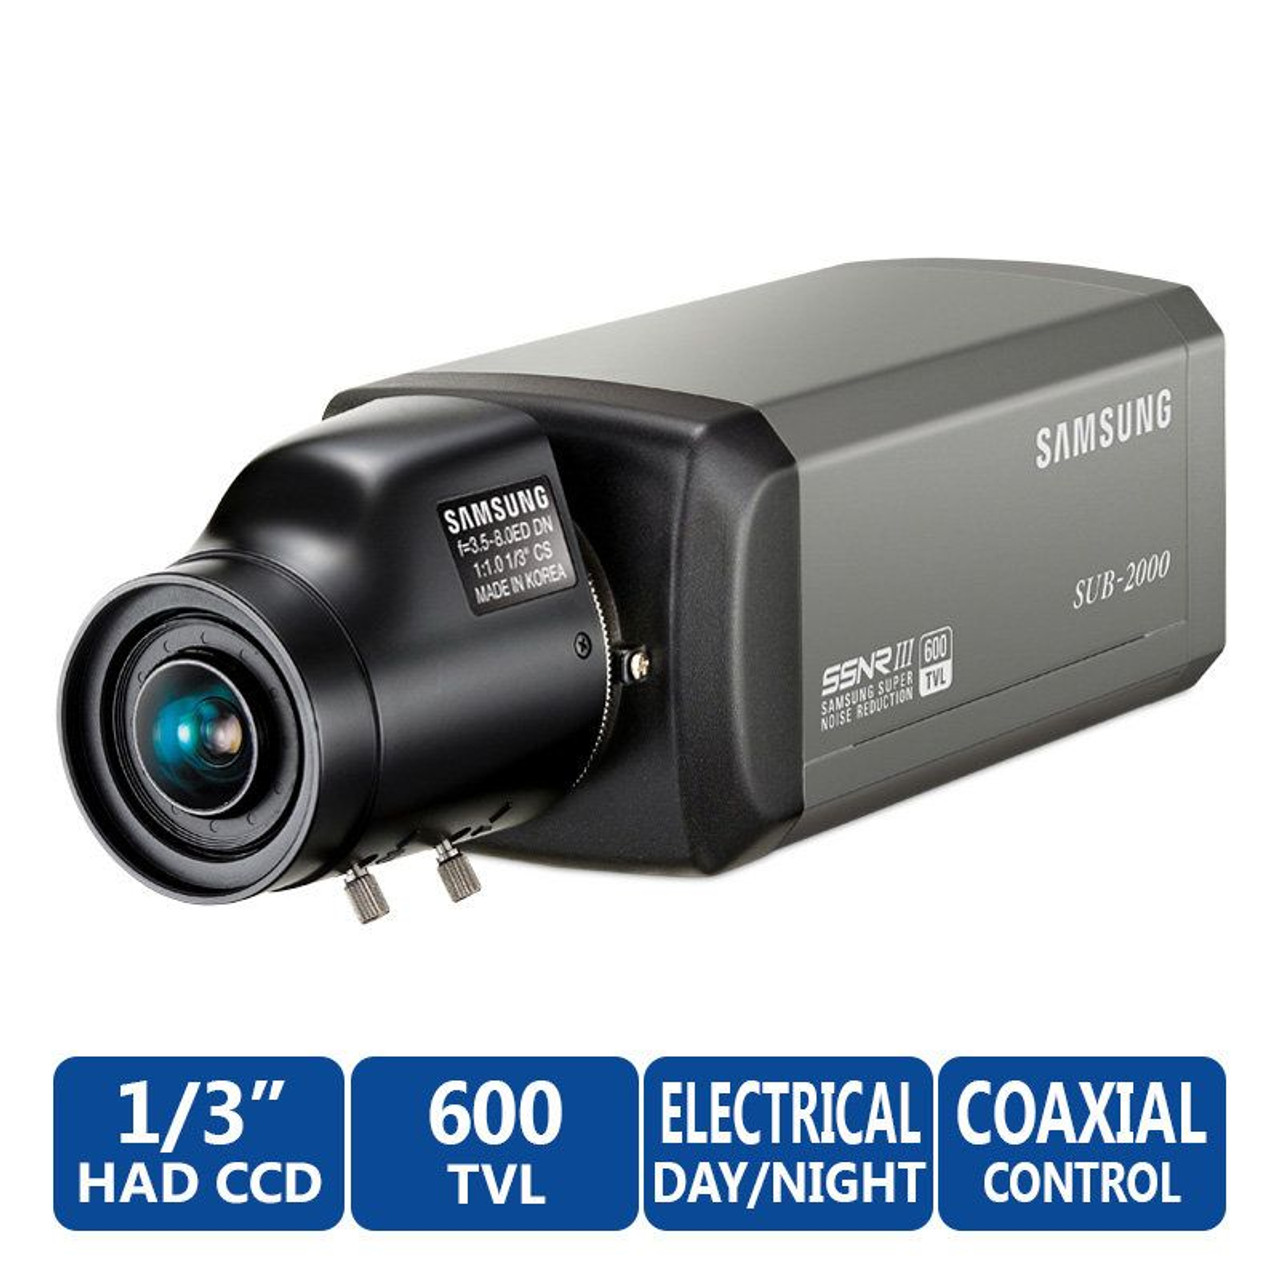 Samsung Hanwha SUB-2000 Indoor Box CCTV Camera